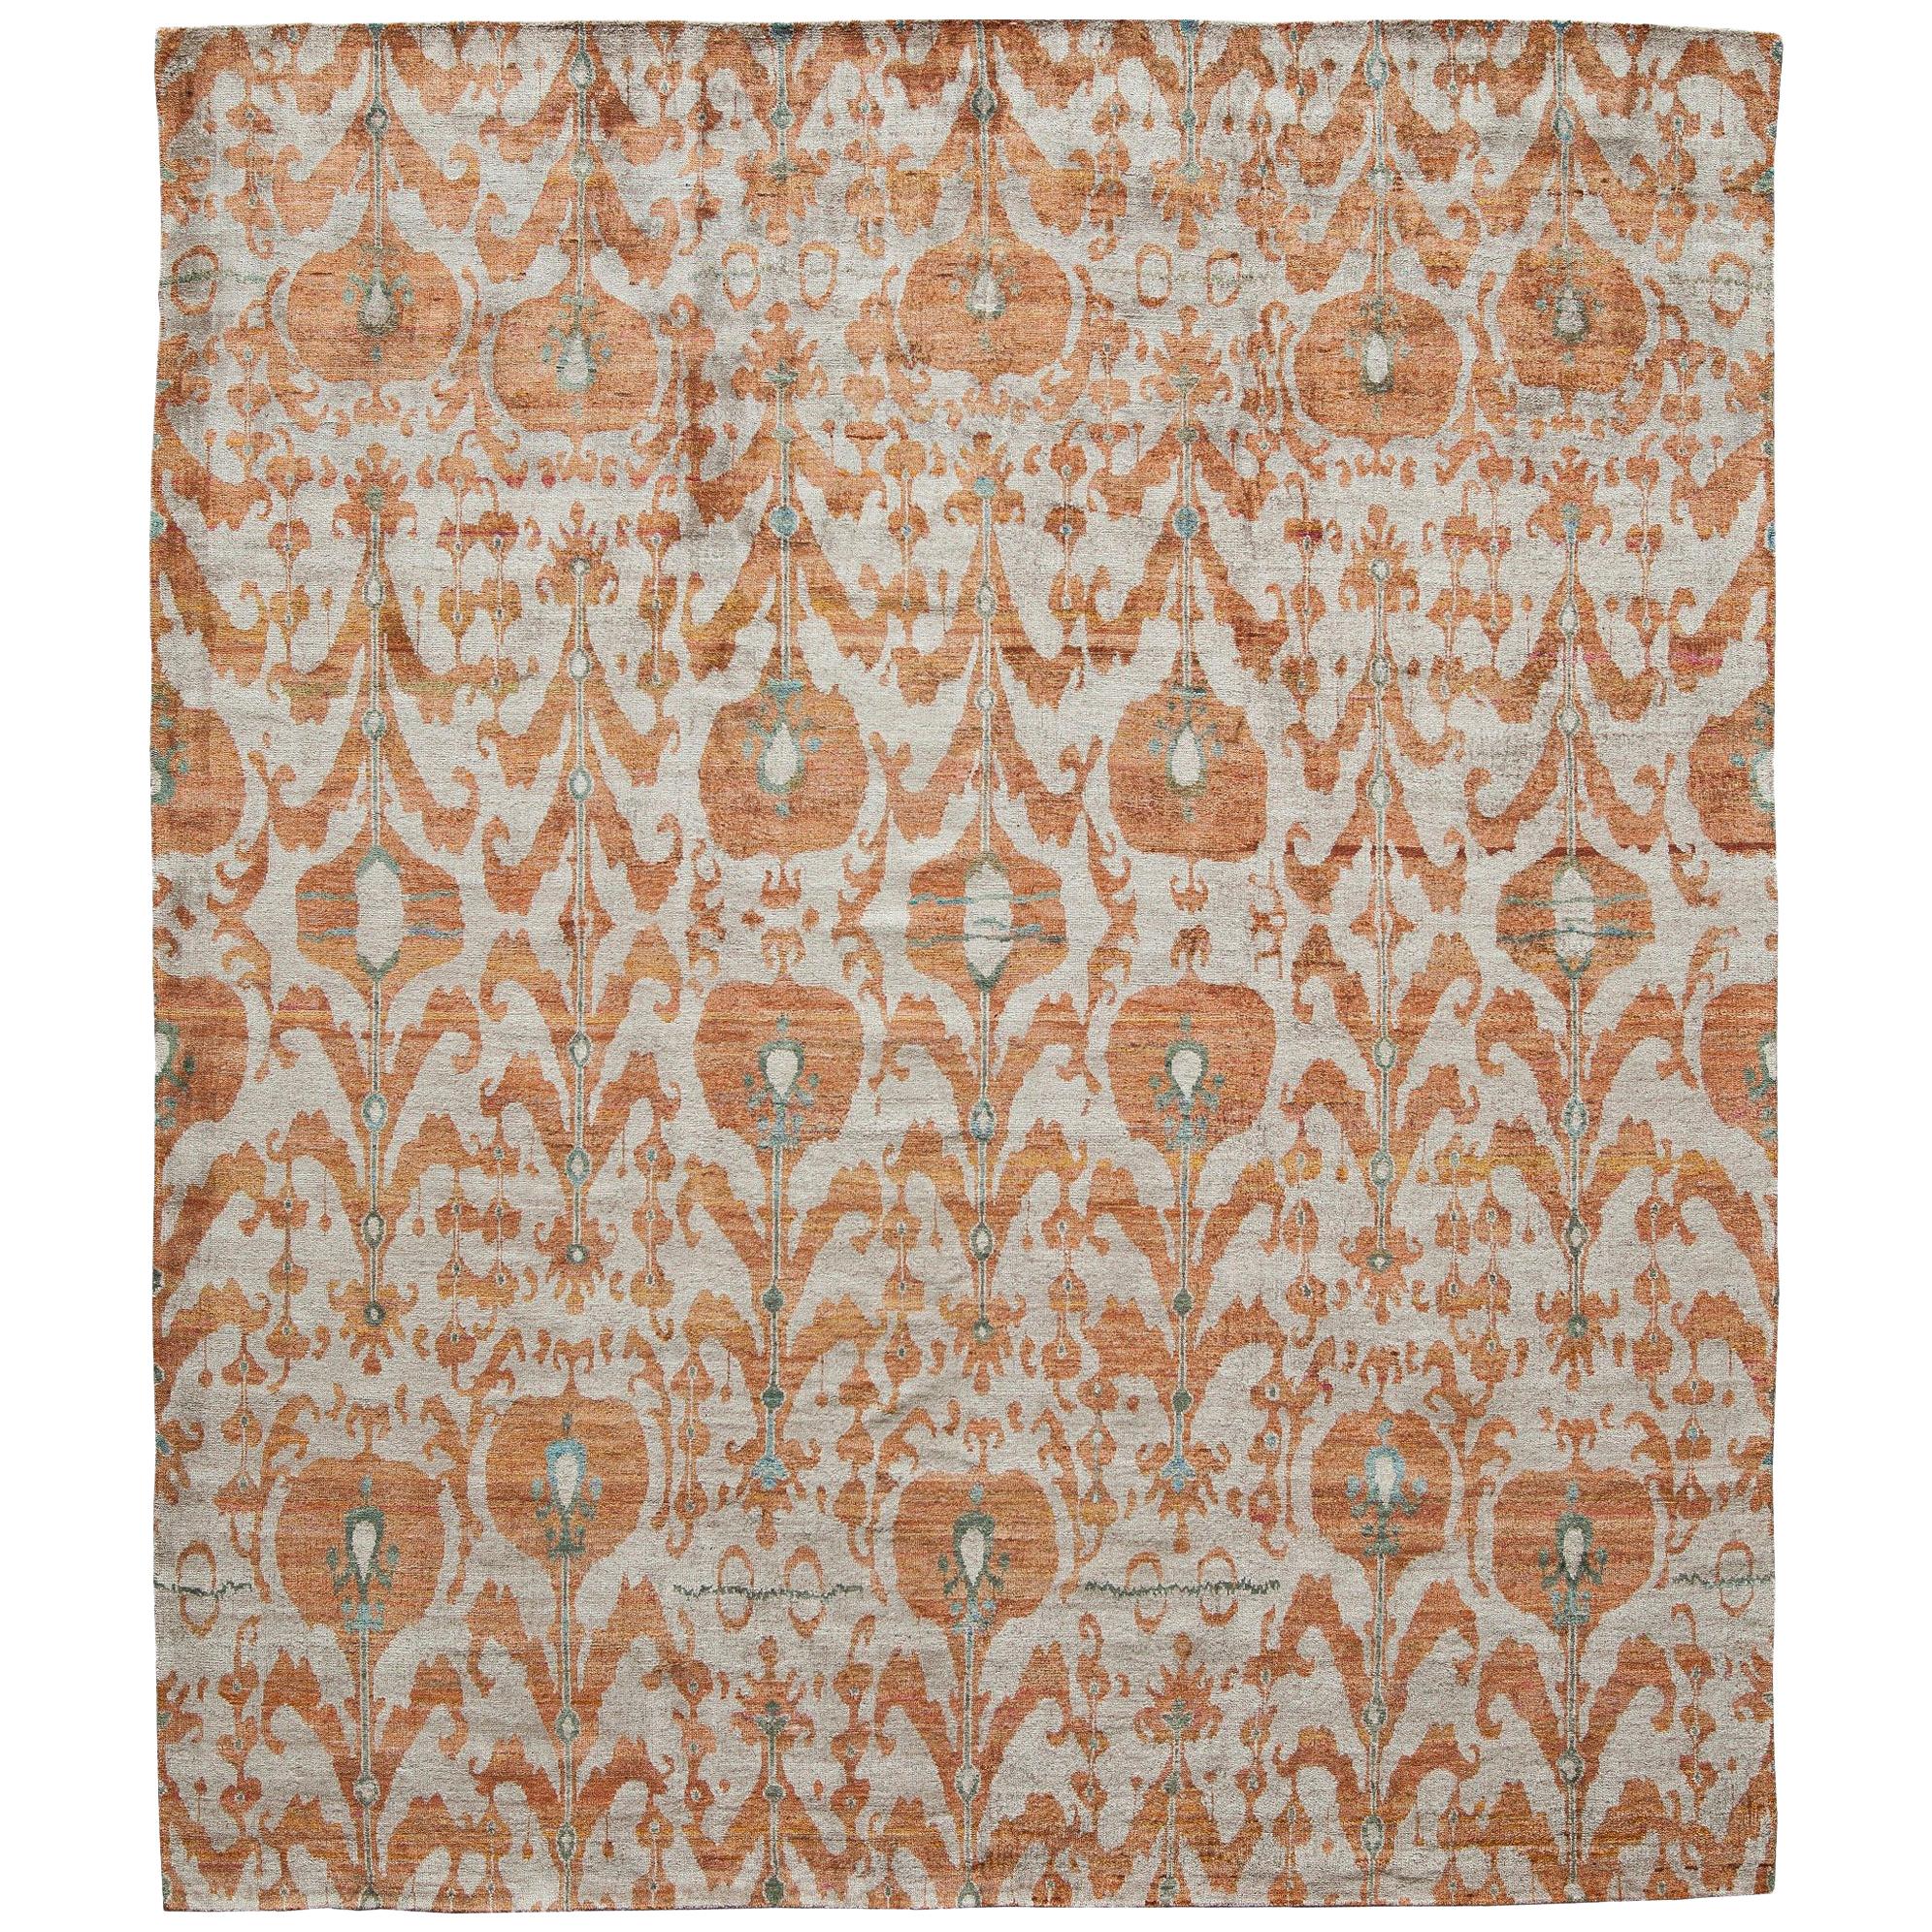 Rust Orange Silber Seide Beige Teppich Handgeknüpft Ikat Muster mit Luxe Weave